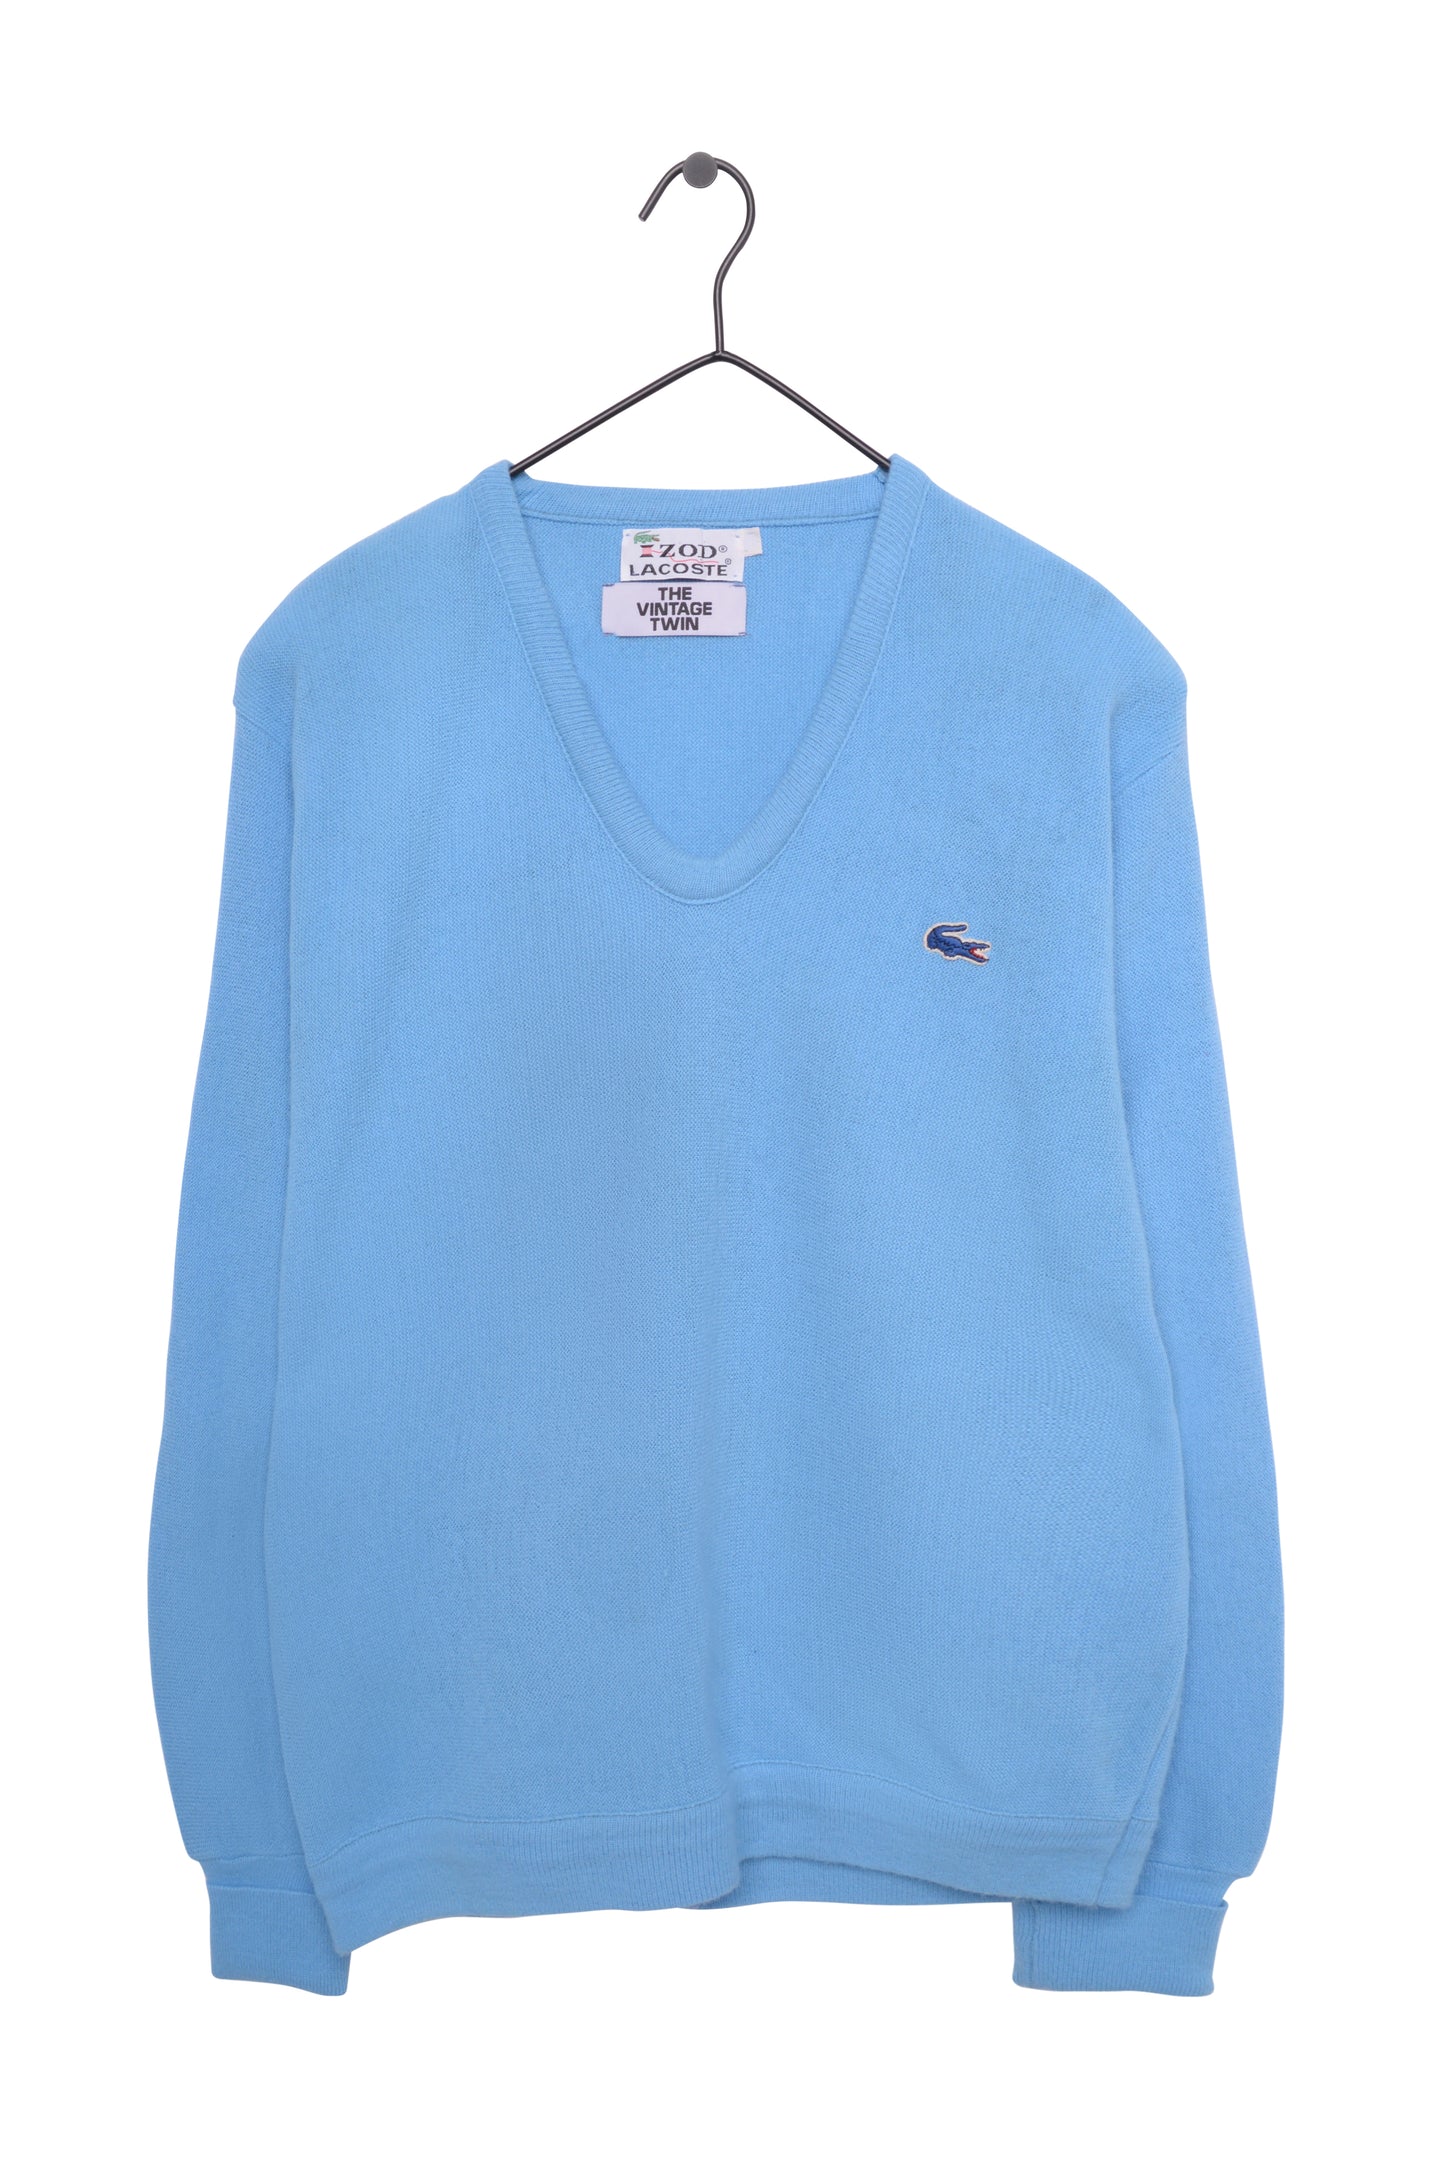 Sky Blue Lacoste Sweater